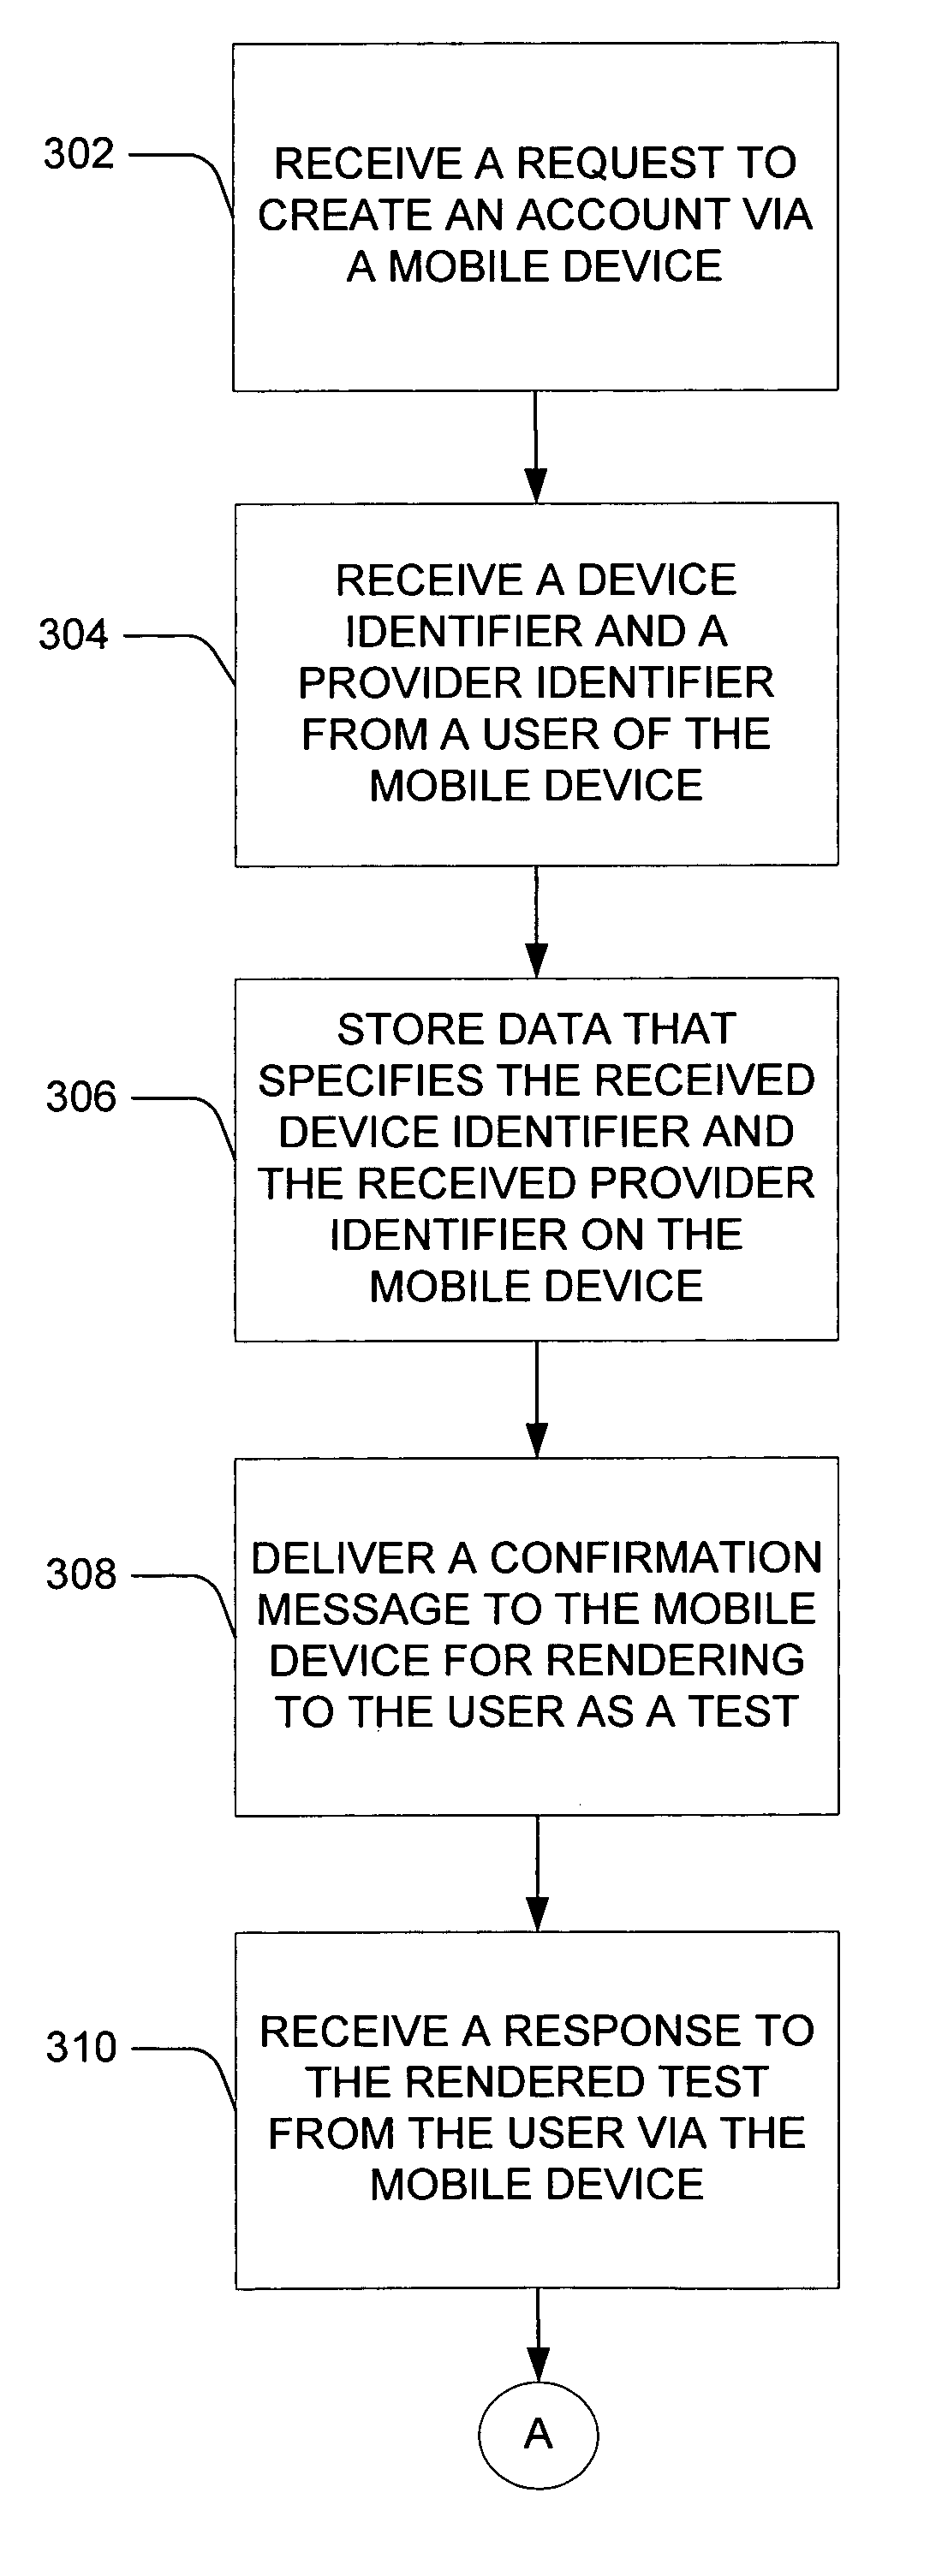 Account creation via a mobile device